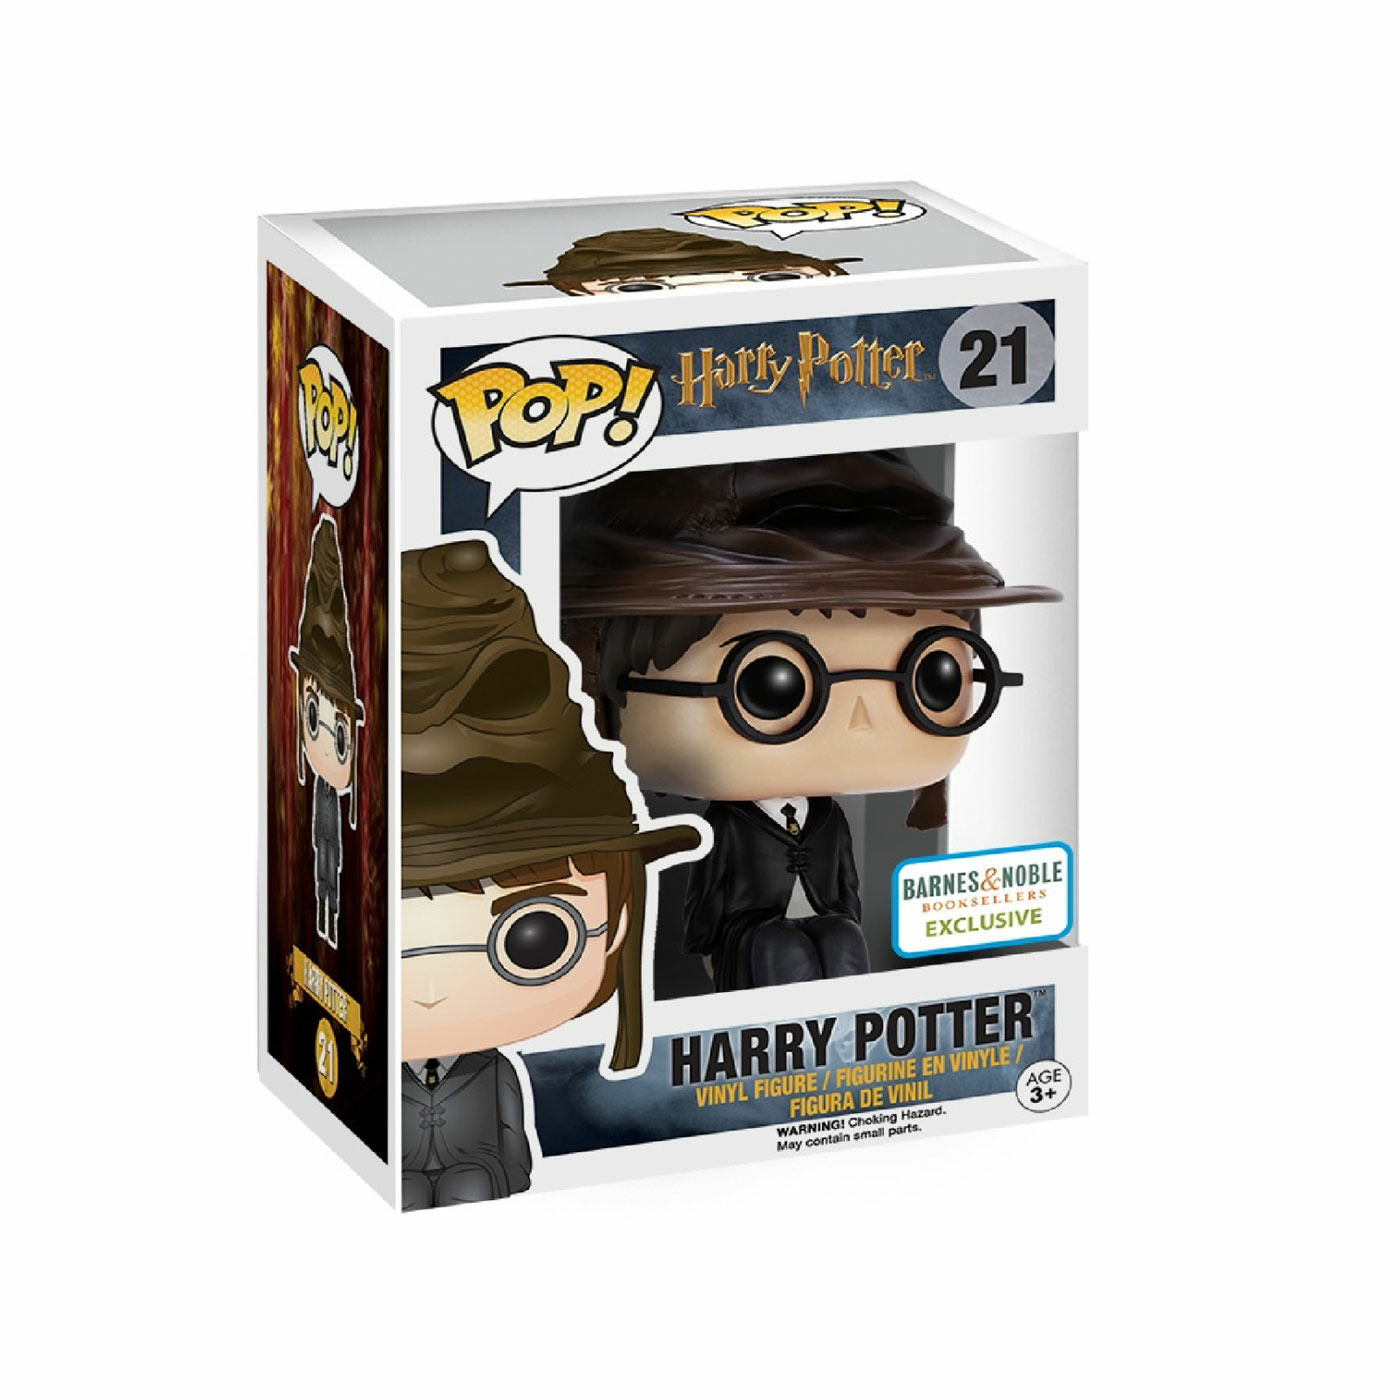 Funko POP Harry Potter: Harry Potter Con Sombrero